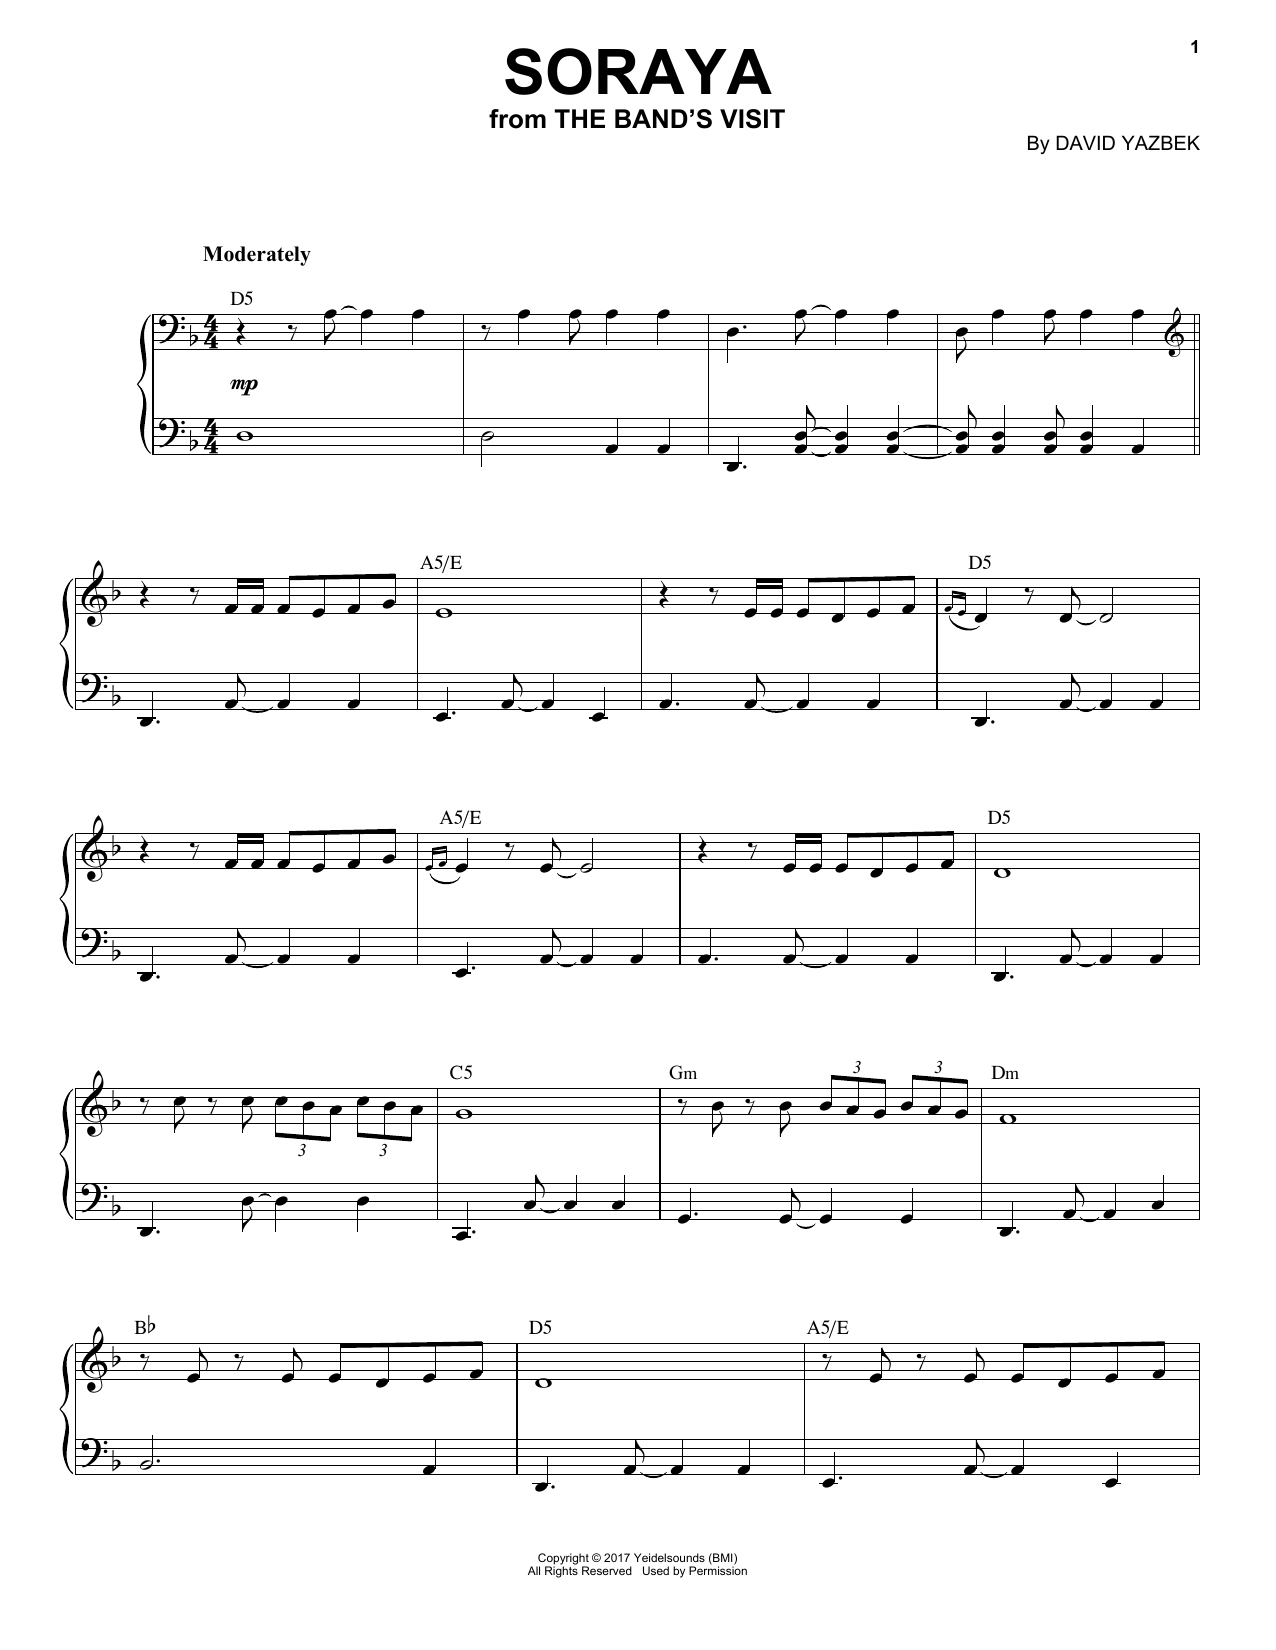 David Yazbek Soraya Sheet Music Notes & Chords for Piano - Download or Print PDF